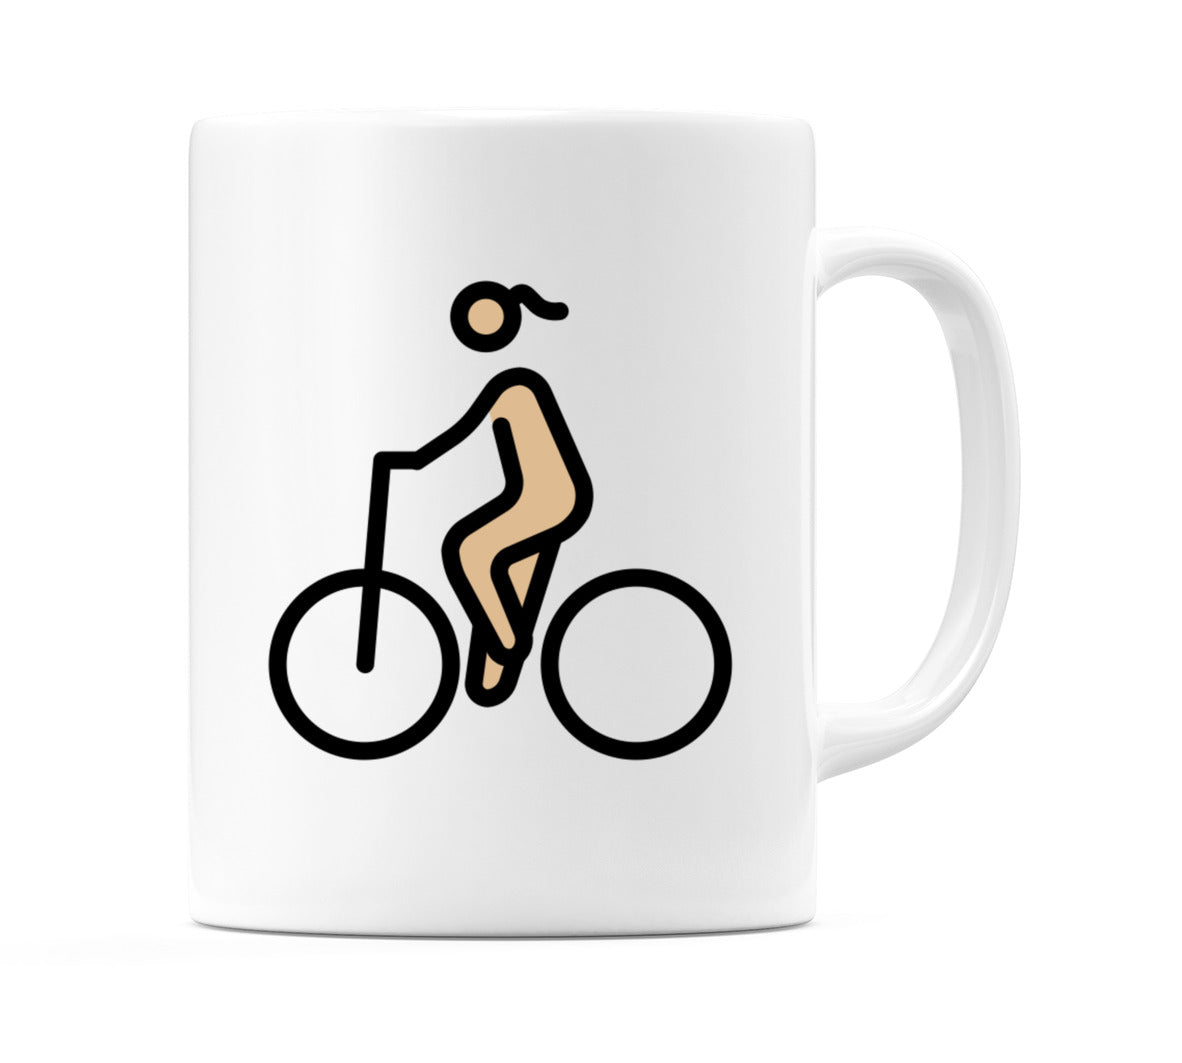 Female Biking: Medium-Light Skin Tone Emoji Mug